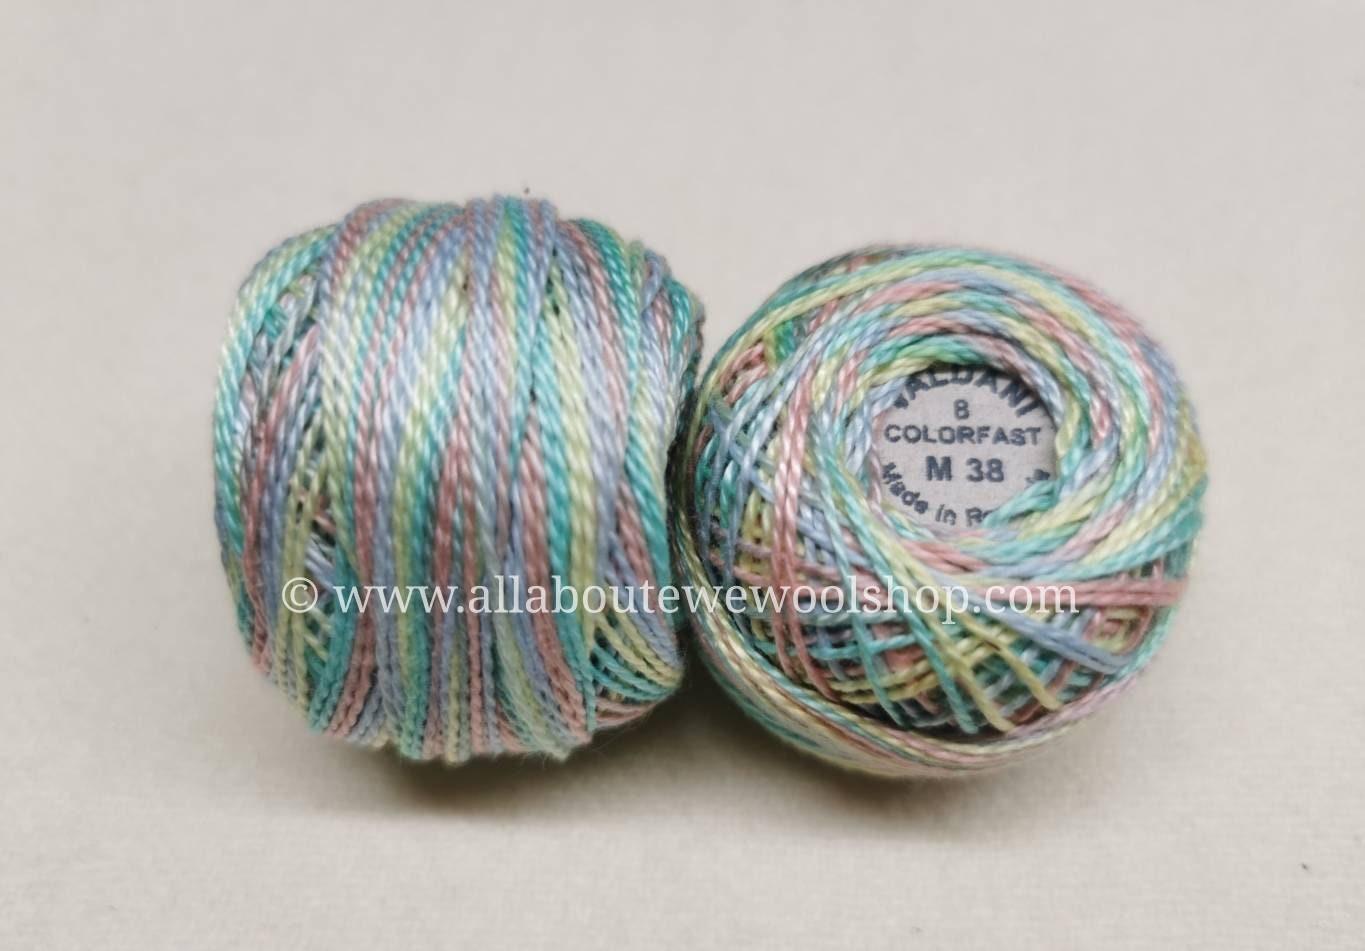 M38 #8 Valdani Pearl/Perle Cotton Thread - All About Ewe Wool Shop